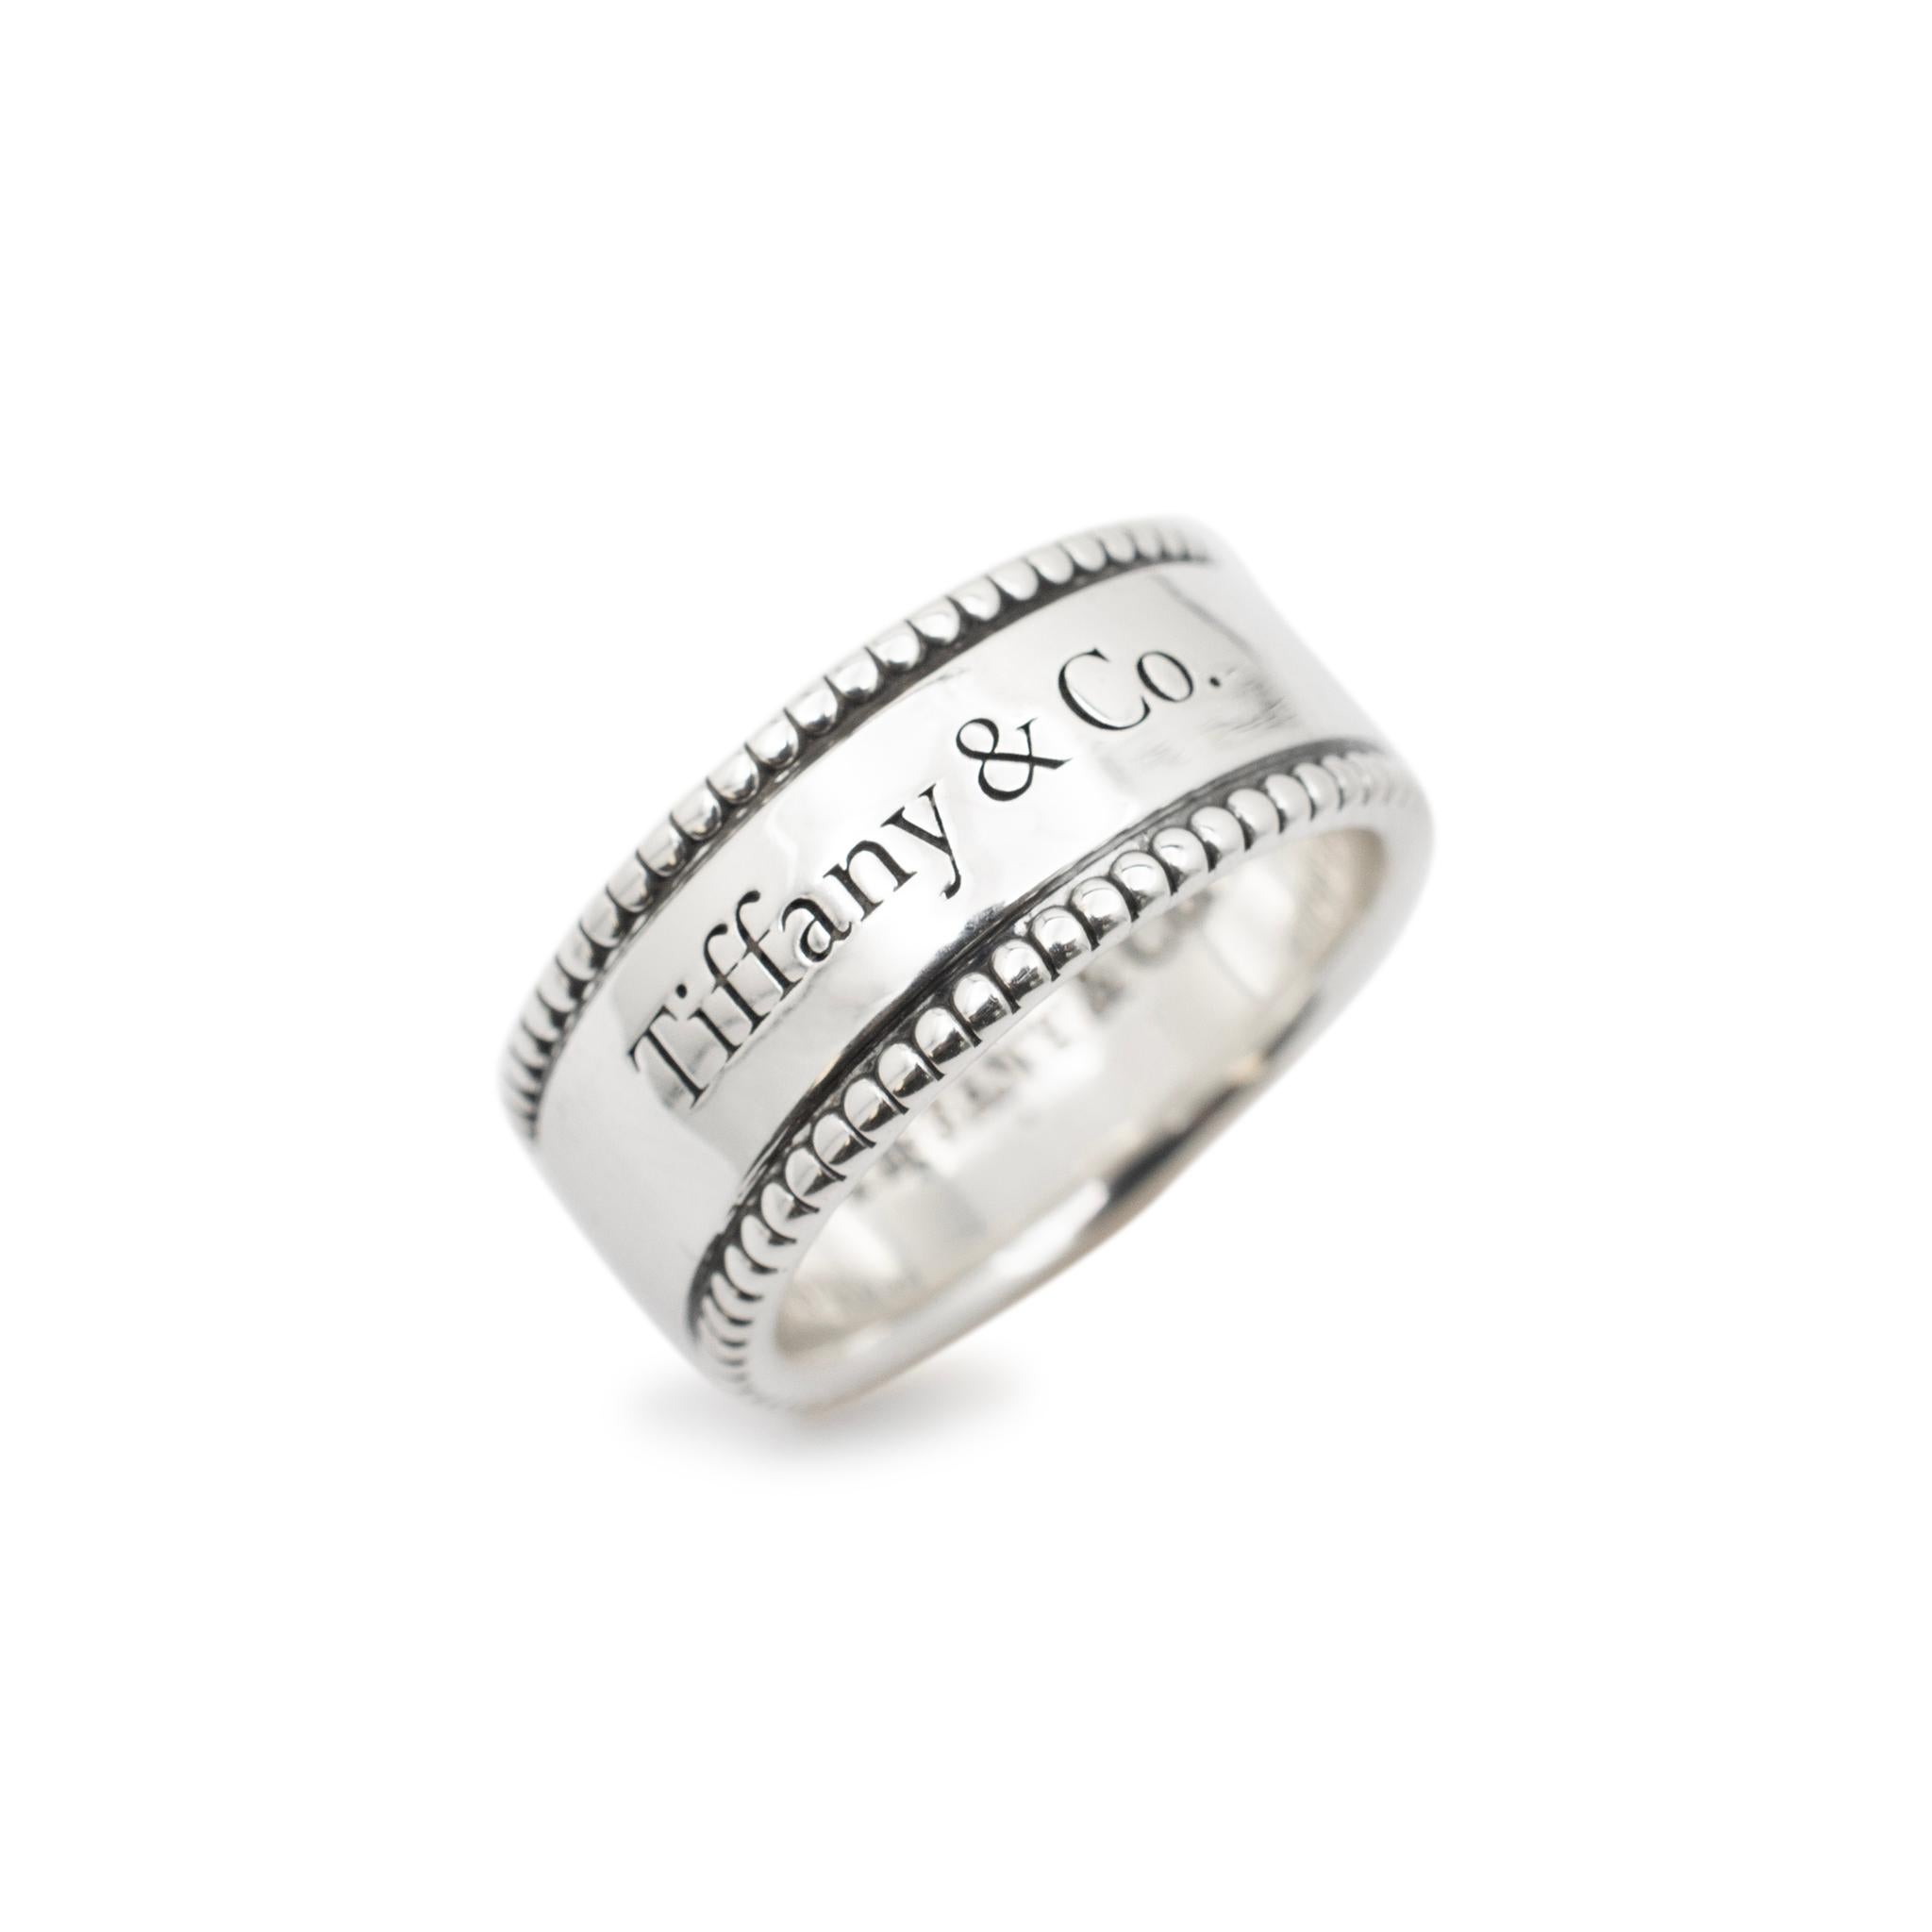 Brand: Tiffany & Co.

Gender: Ladies

Metal Type: Sterling Silver

Size: 4.5

Shank Maximum Width: 7.80 mm

Diameter: 19.10 mm

Weight: 6.80 grams

Ladies silver wedding ring. Engraved with 